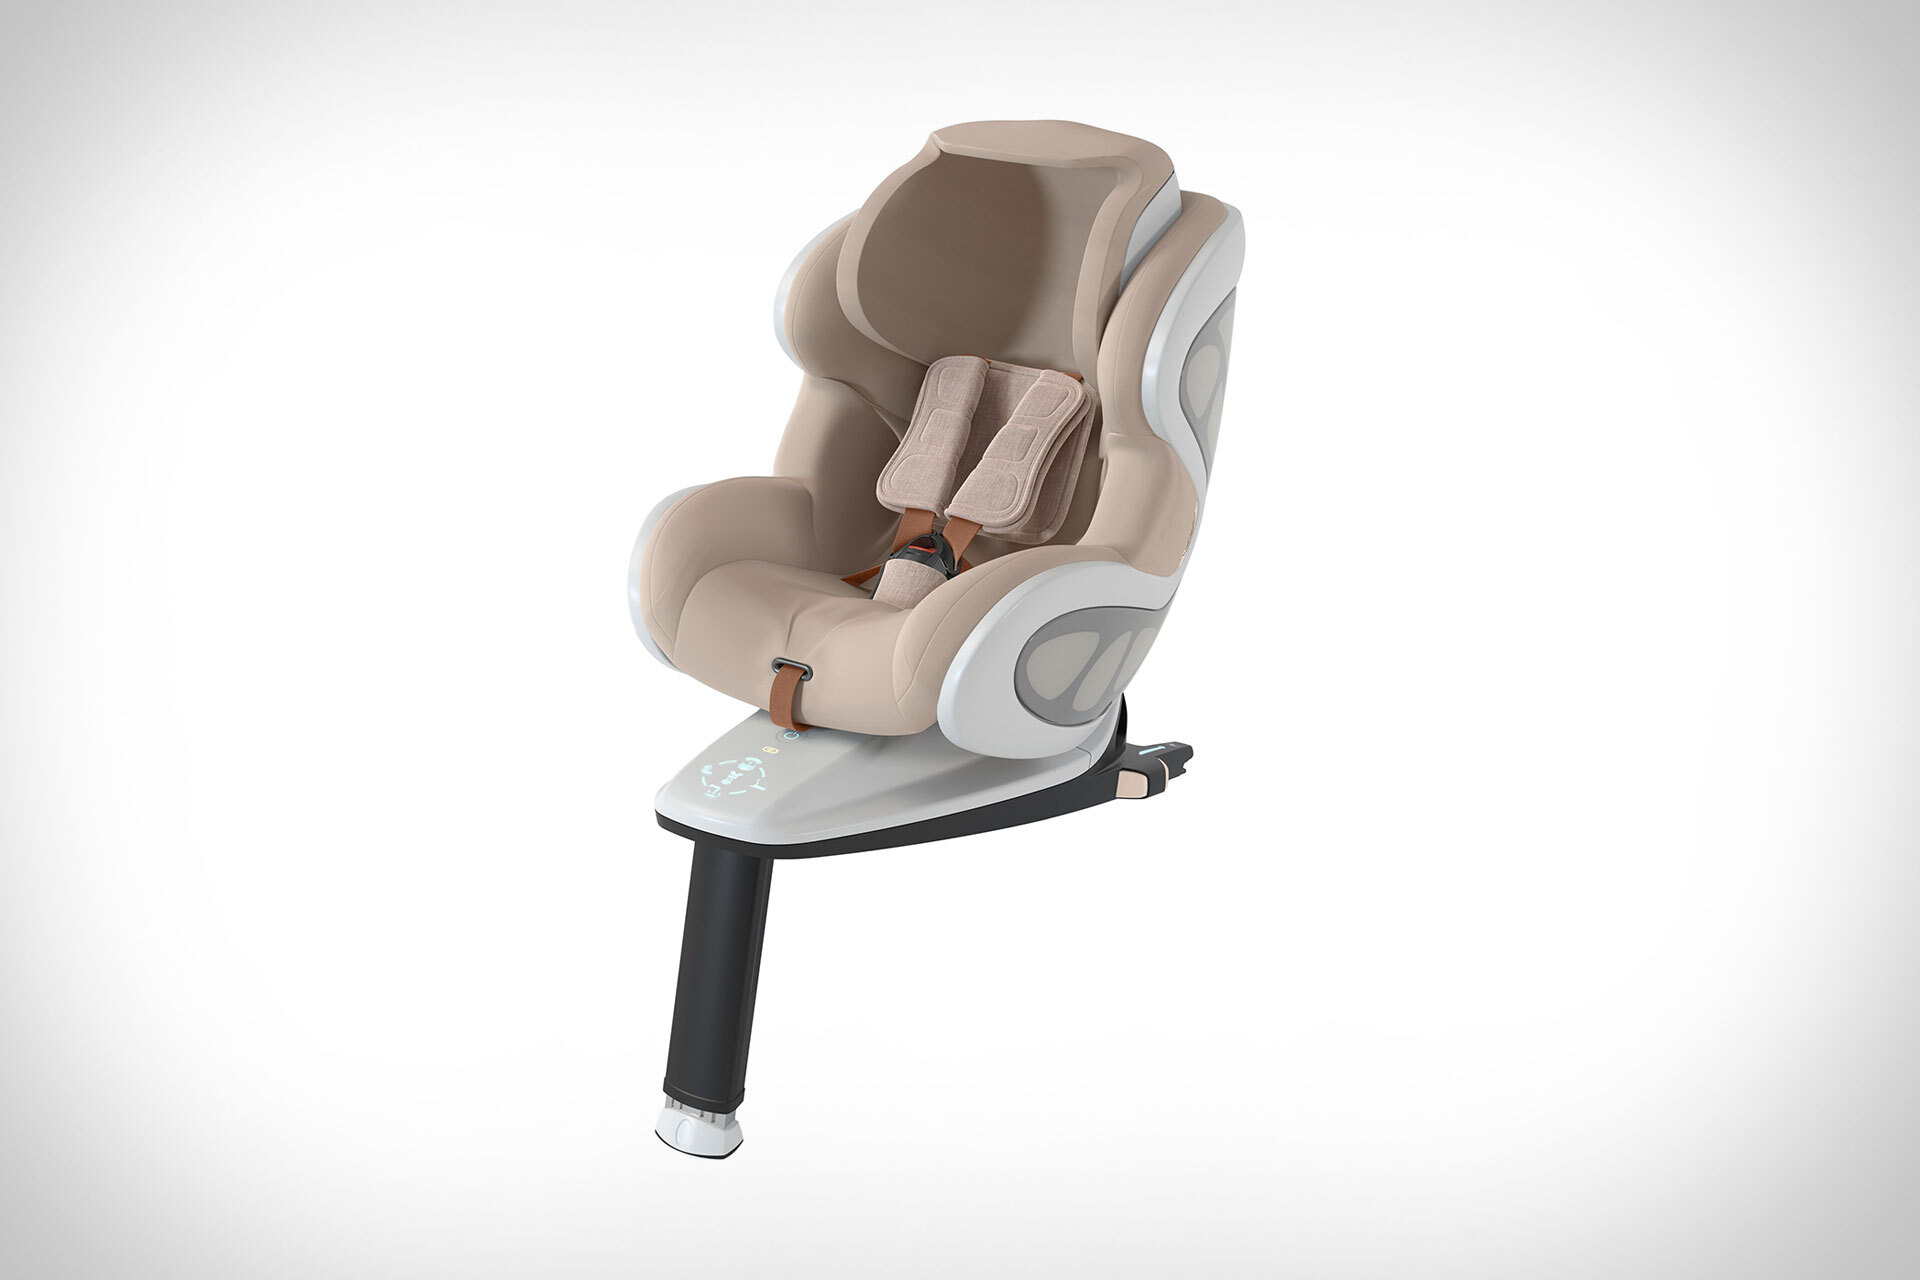 BabyArk Child Car Seat | Uncrate